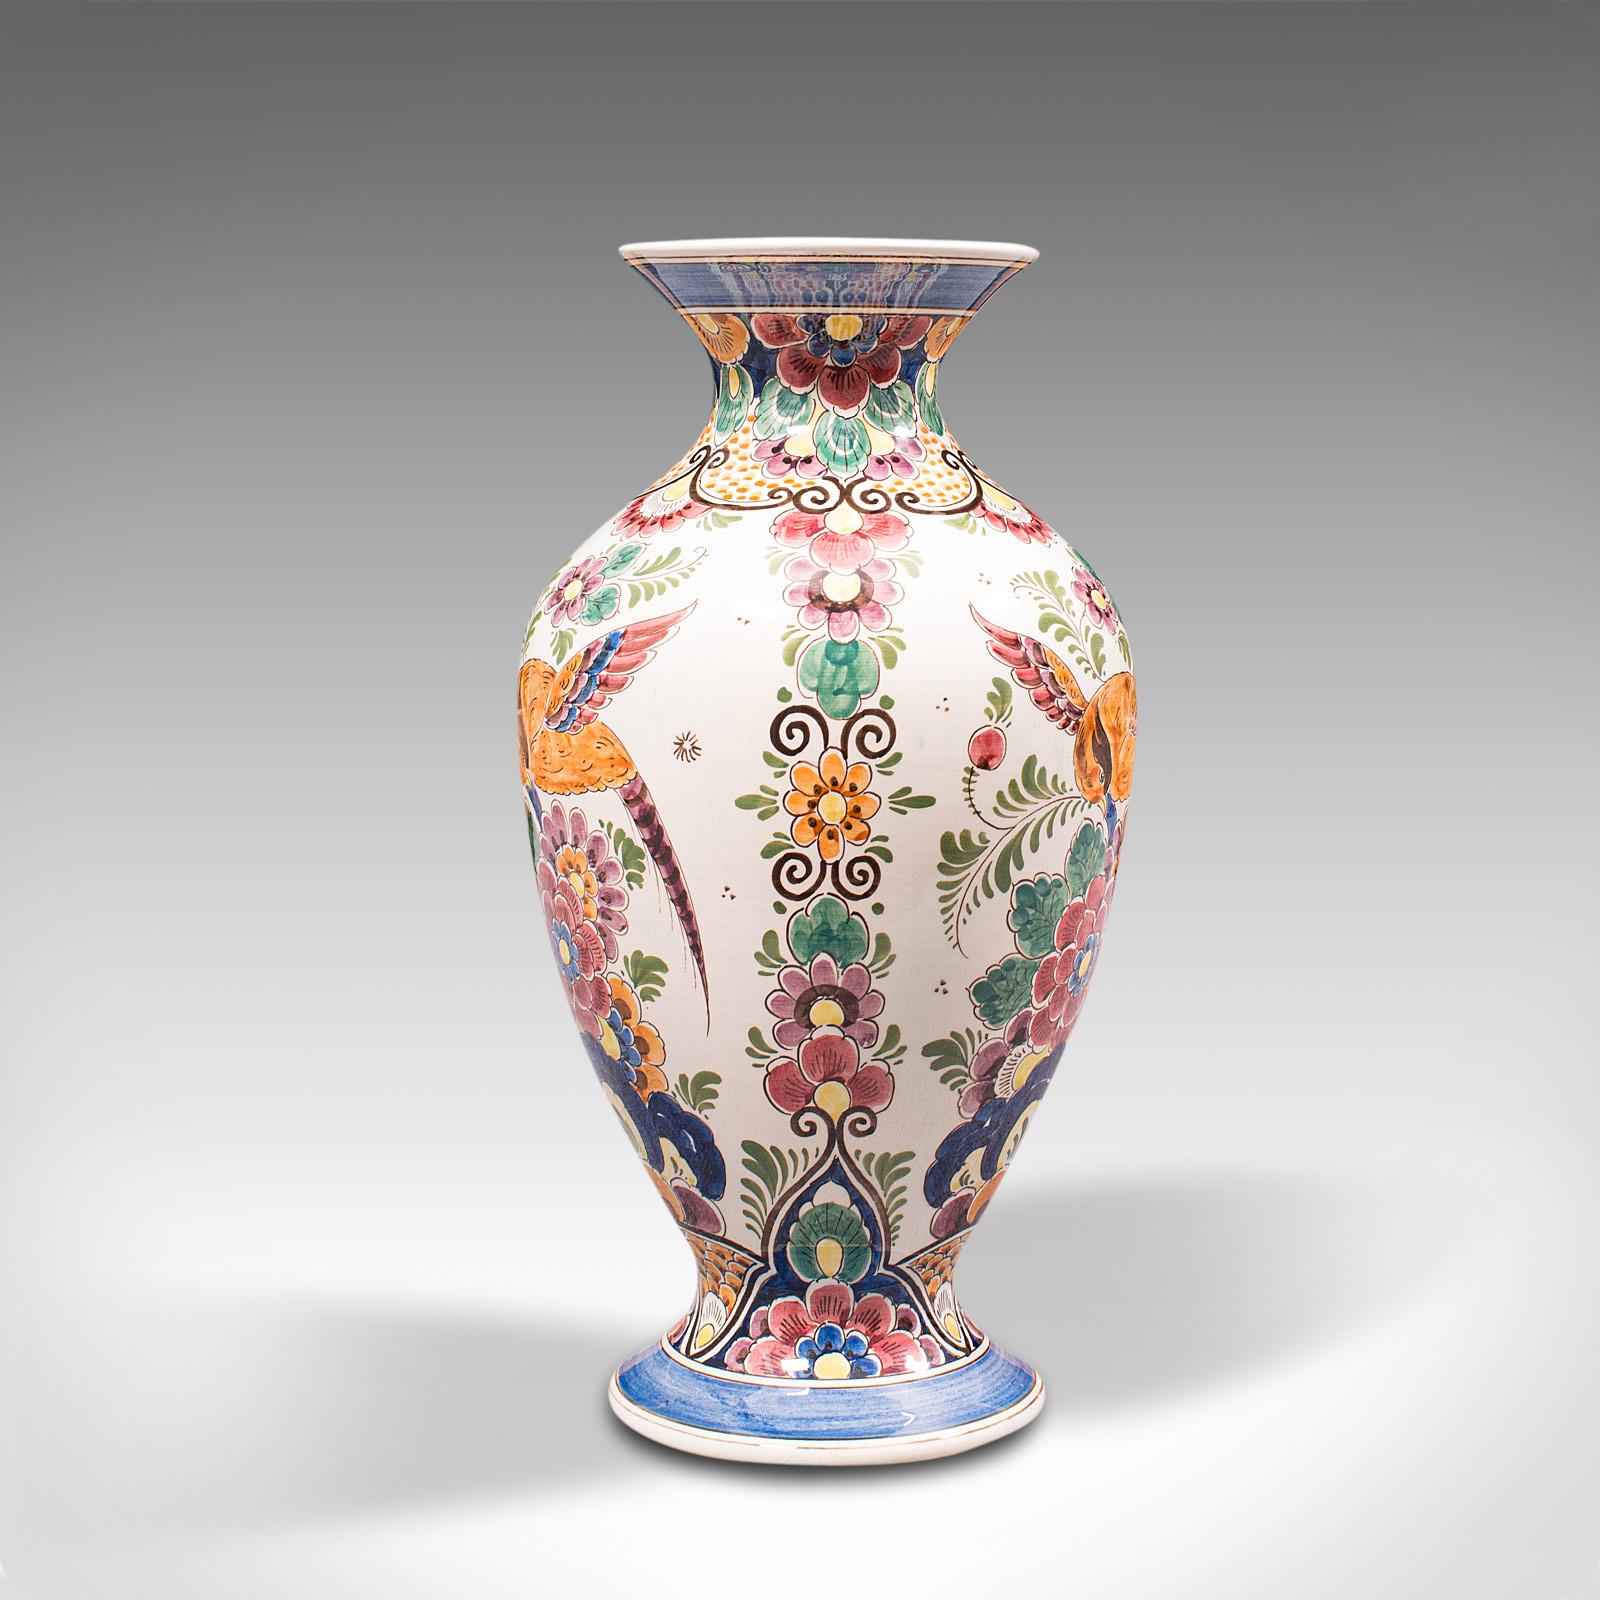 Vintage Polychromatic Vase, Dutch, Delft, Ceramic, Ornament, Mid 20th.C, C.1960 For Sale 1